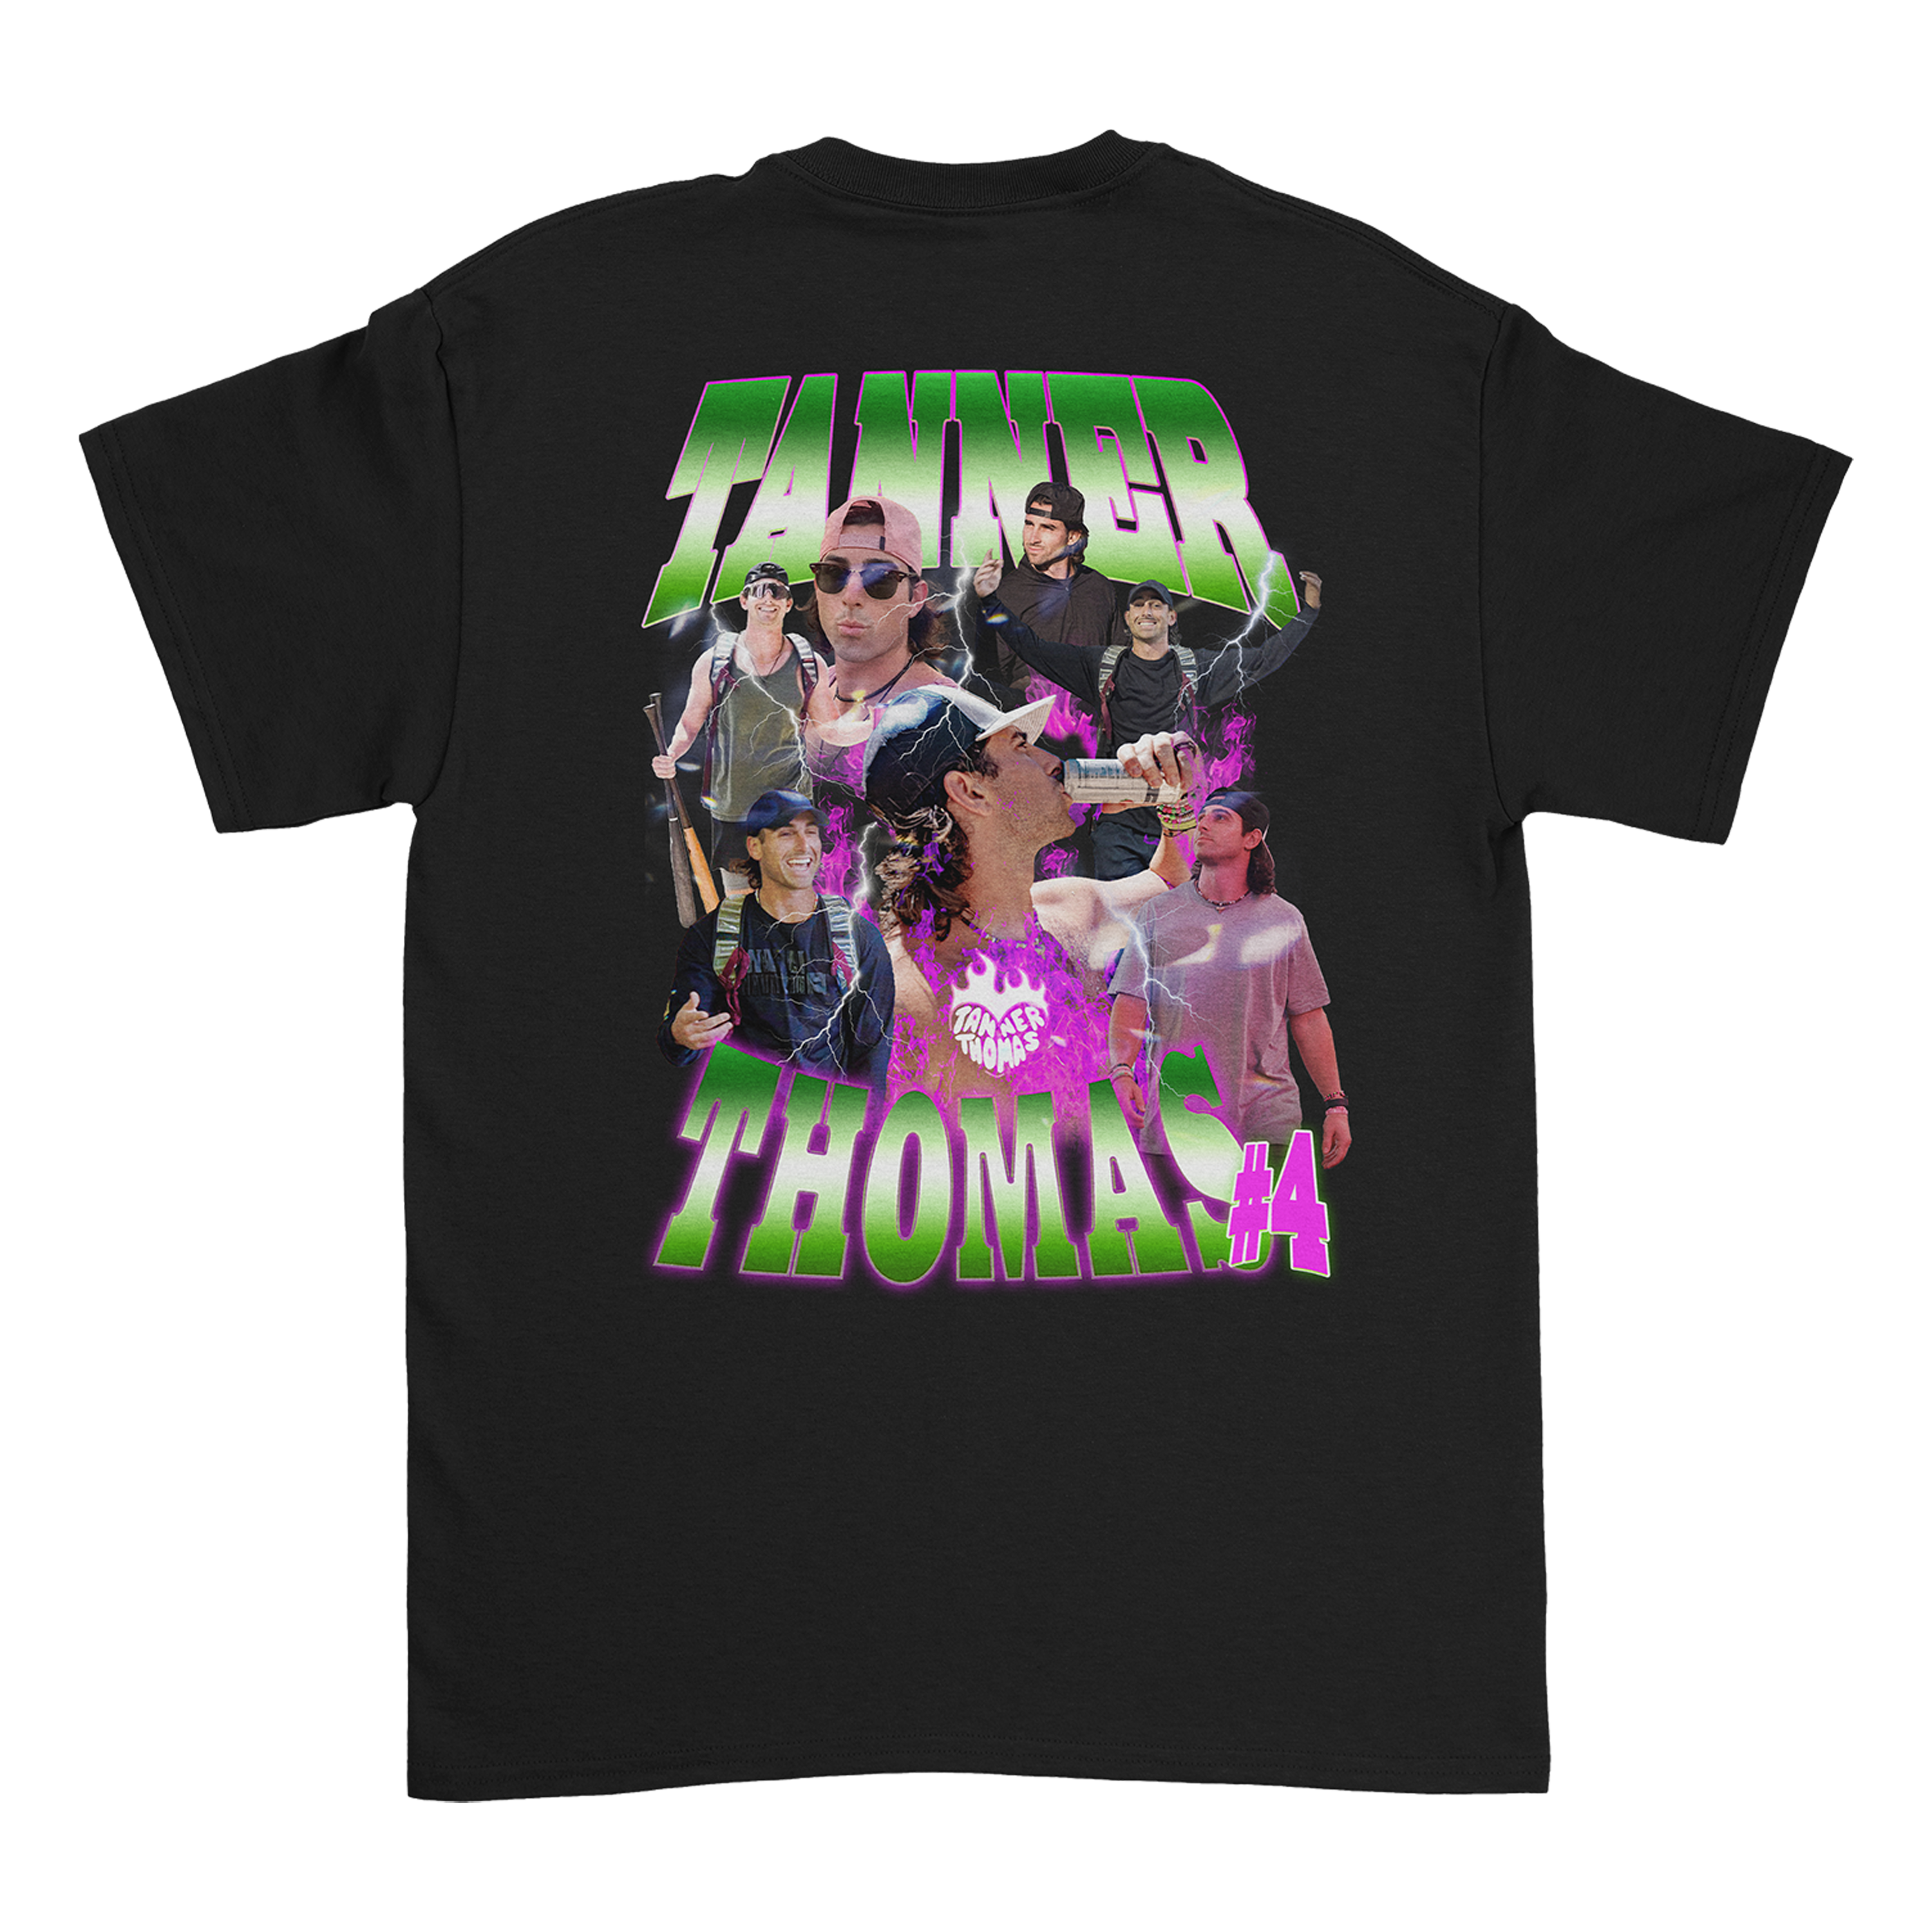 Tanner Thomas T-Shirt